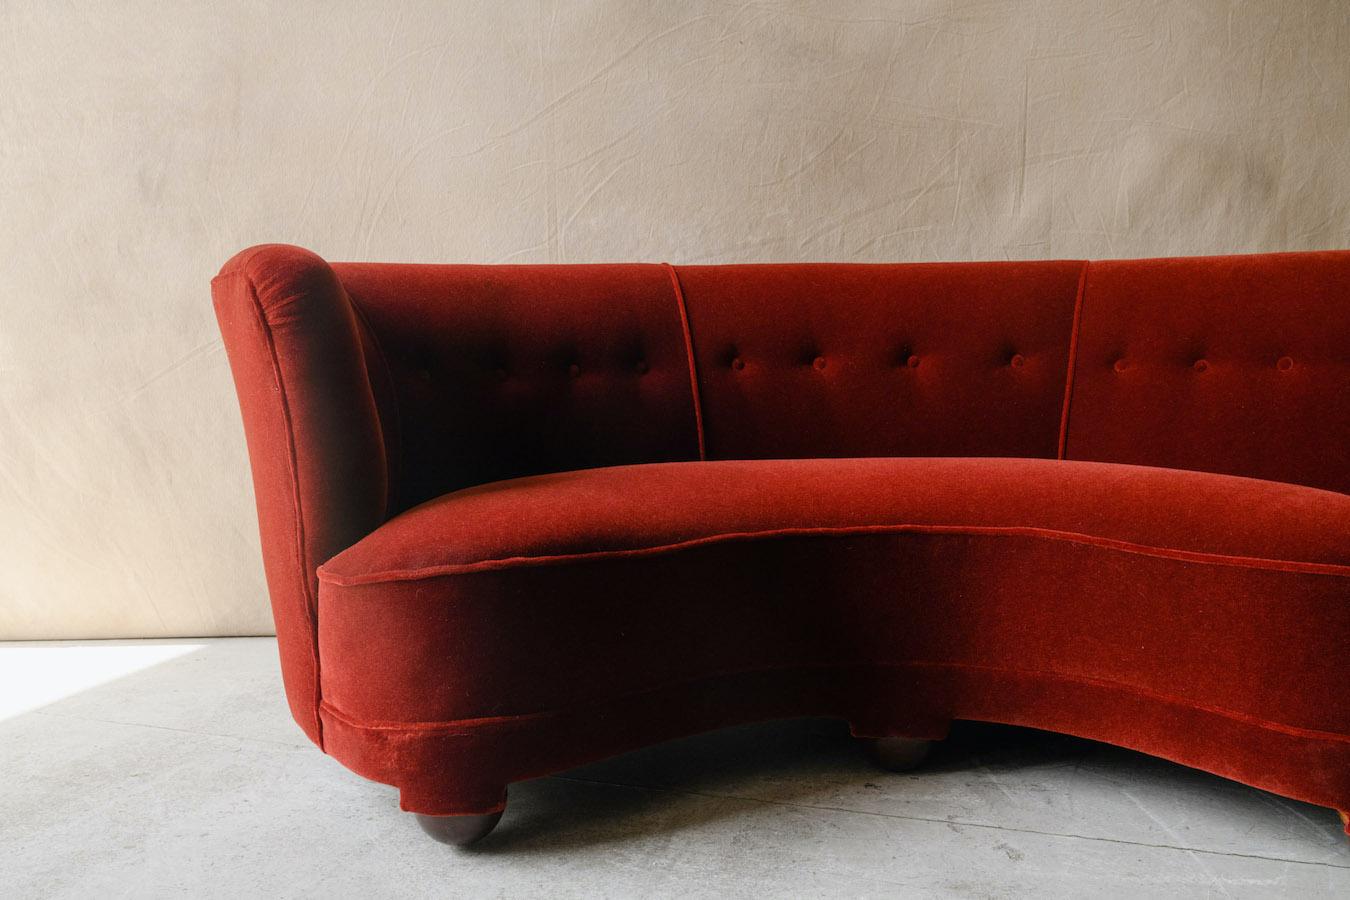 European Vintage Mid Century Curved Sofa In Mohair Velvet From Denmark, Circa 1950